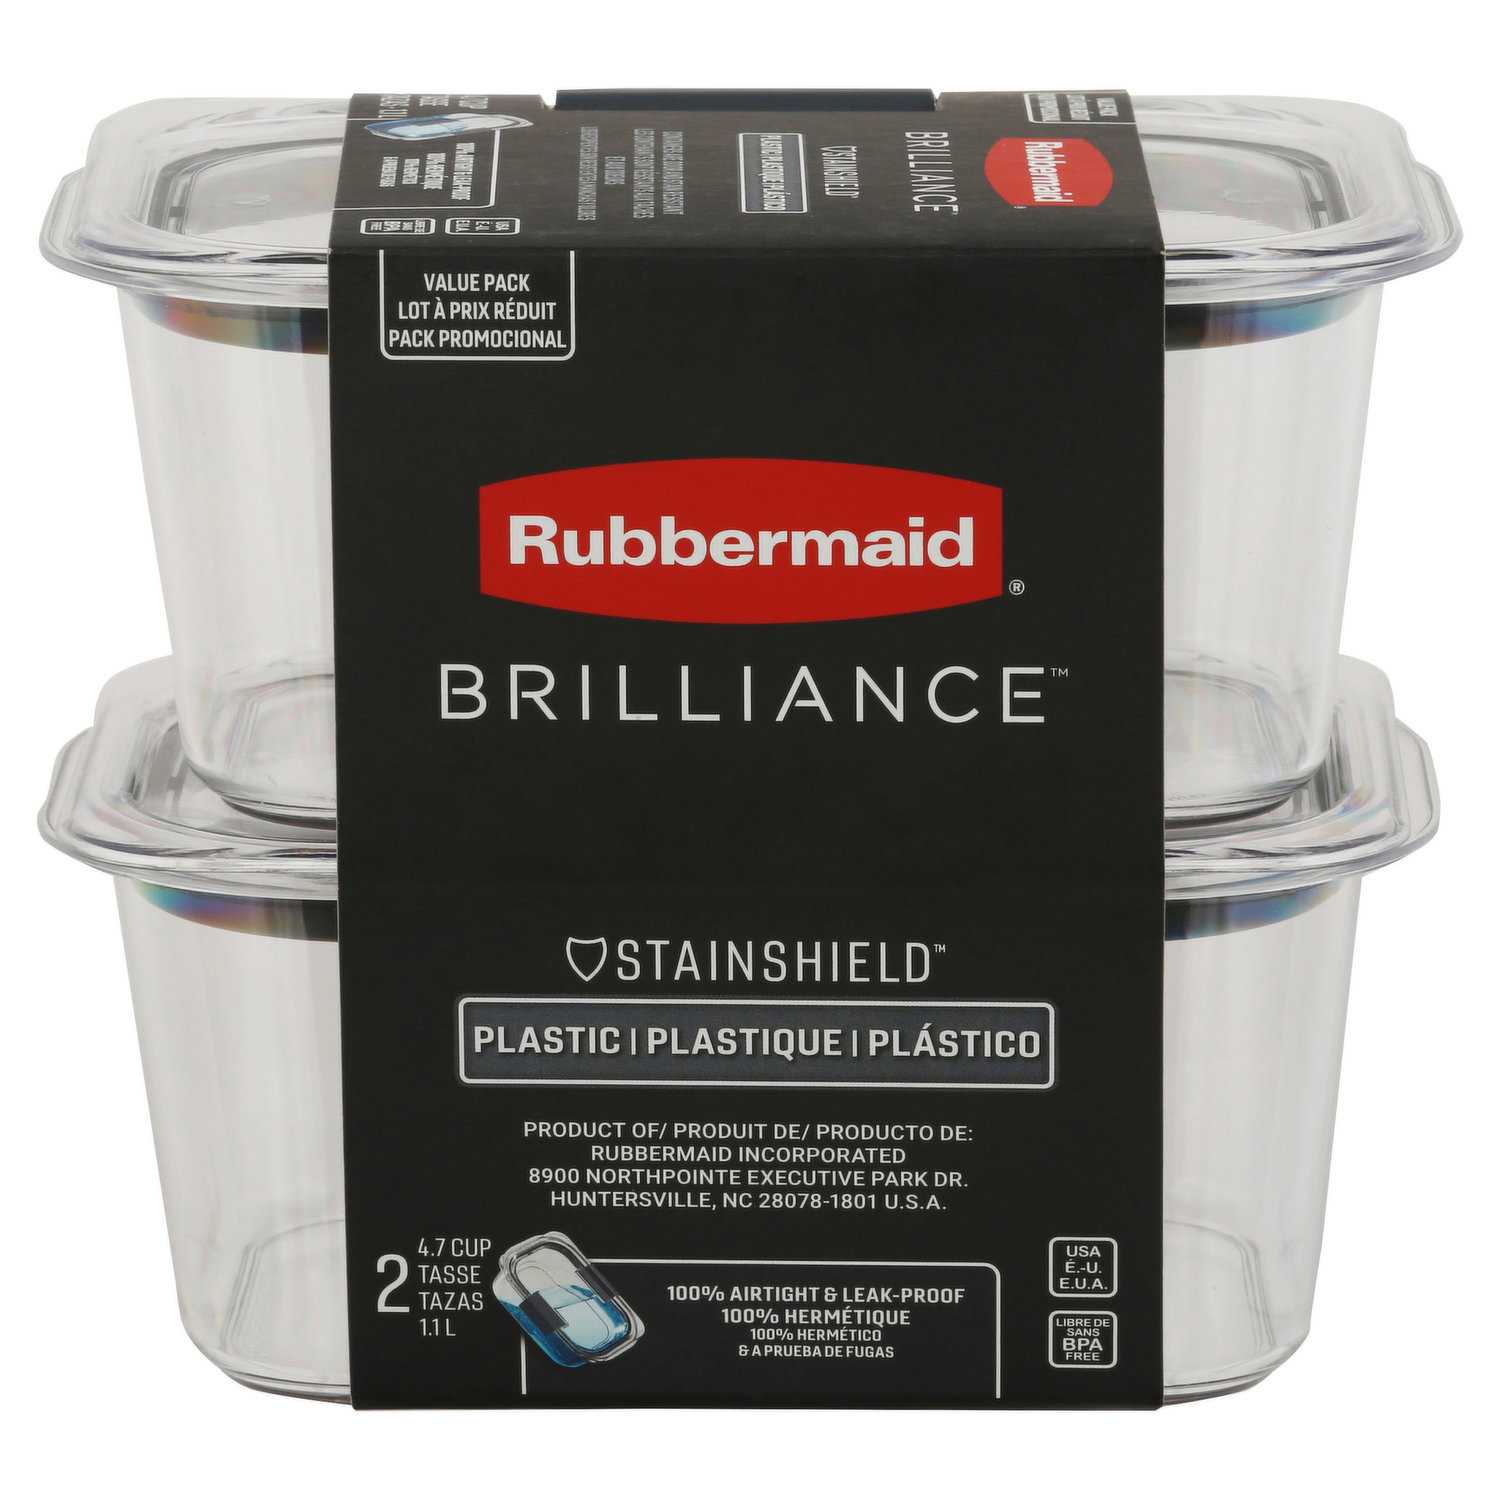 Newell Brands Rubbermaid Brilliance Airtight Food Storage